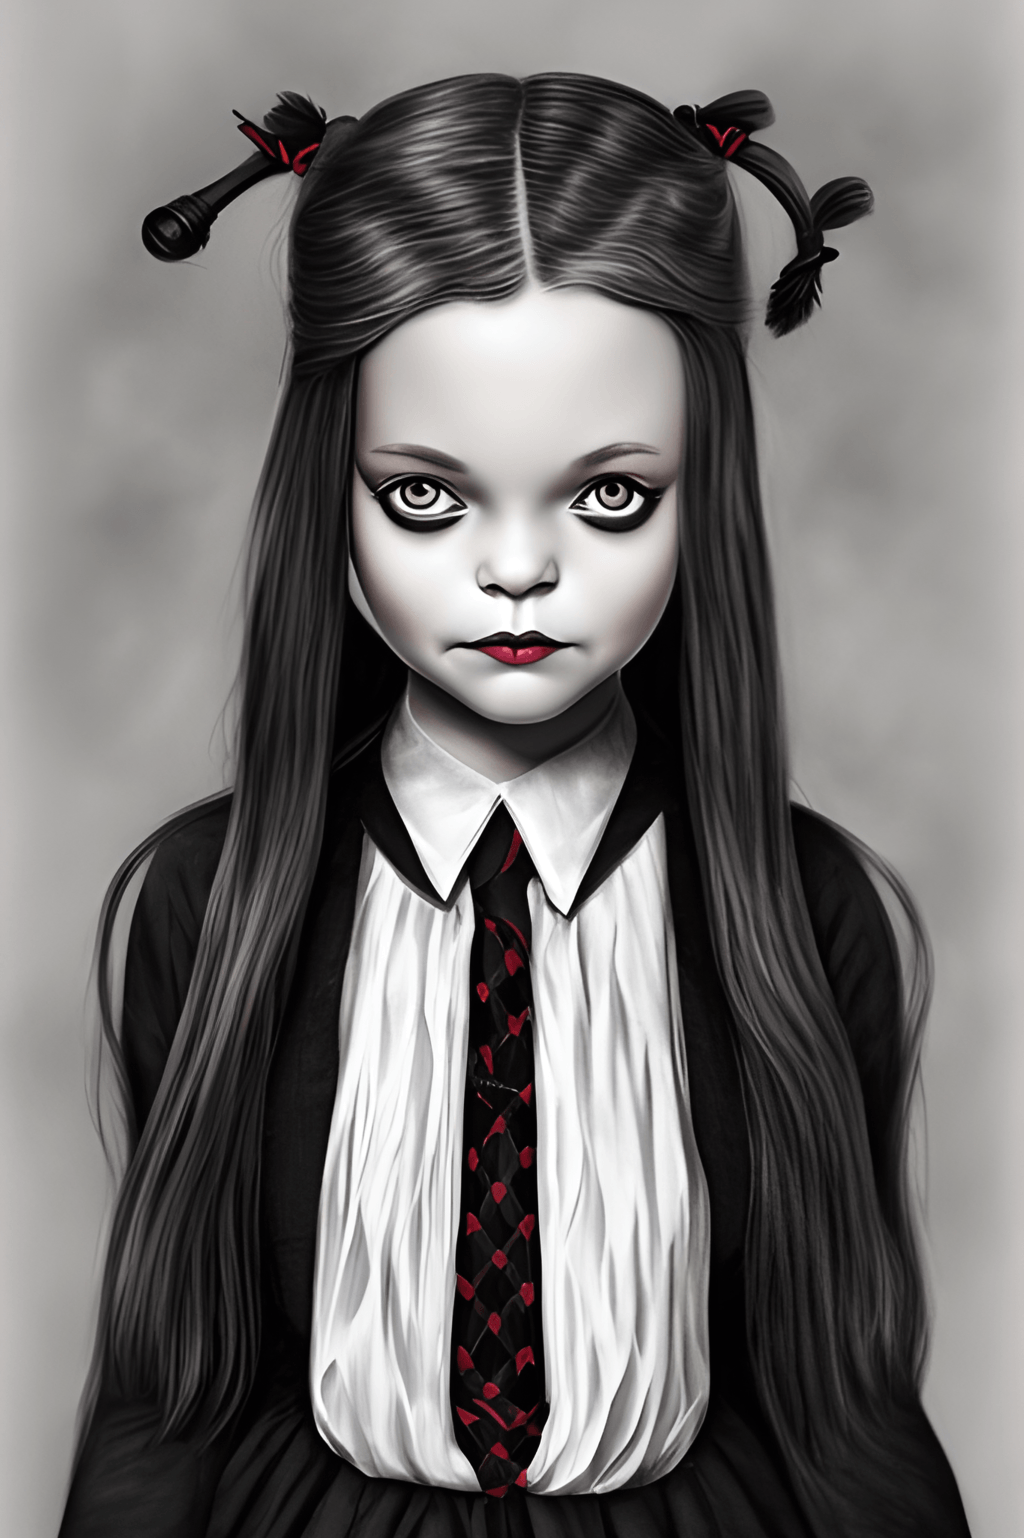 Vintage Wednesday Addams Girl Illustration in School Uniform · Creative ...